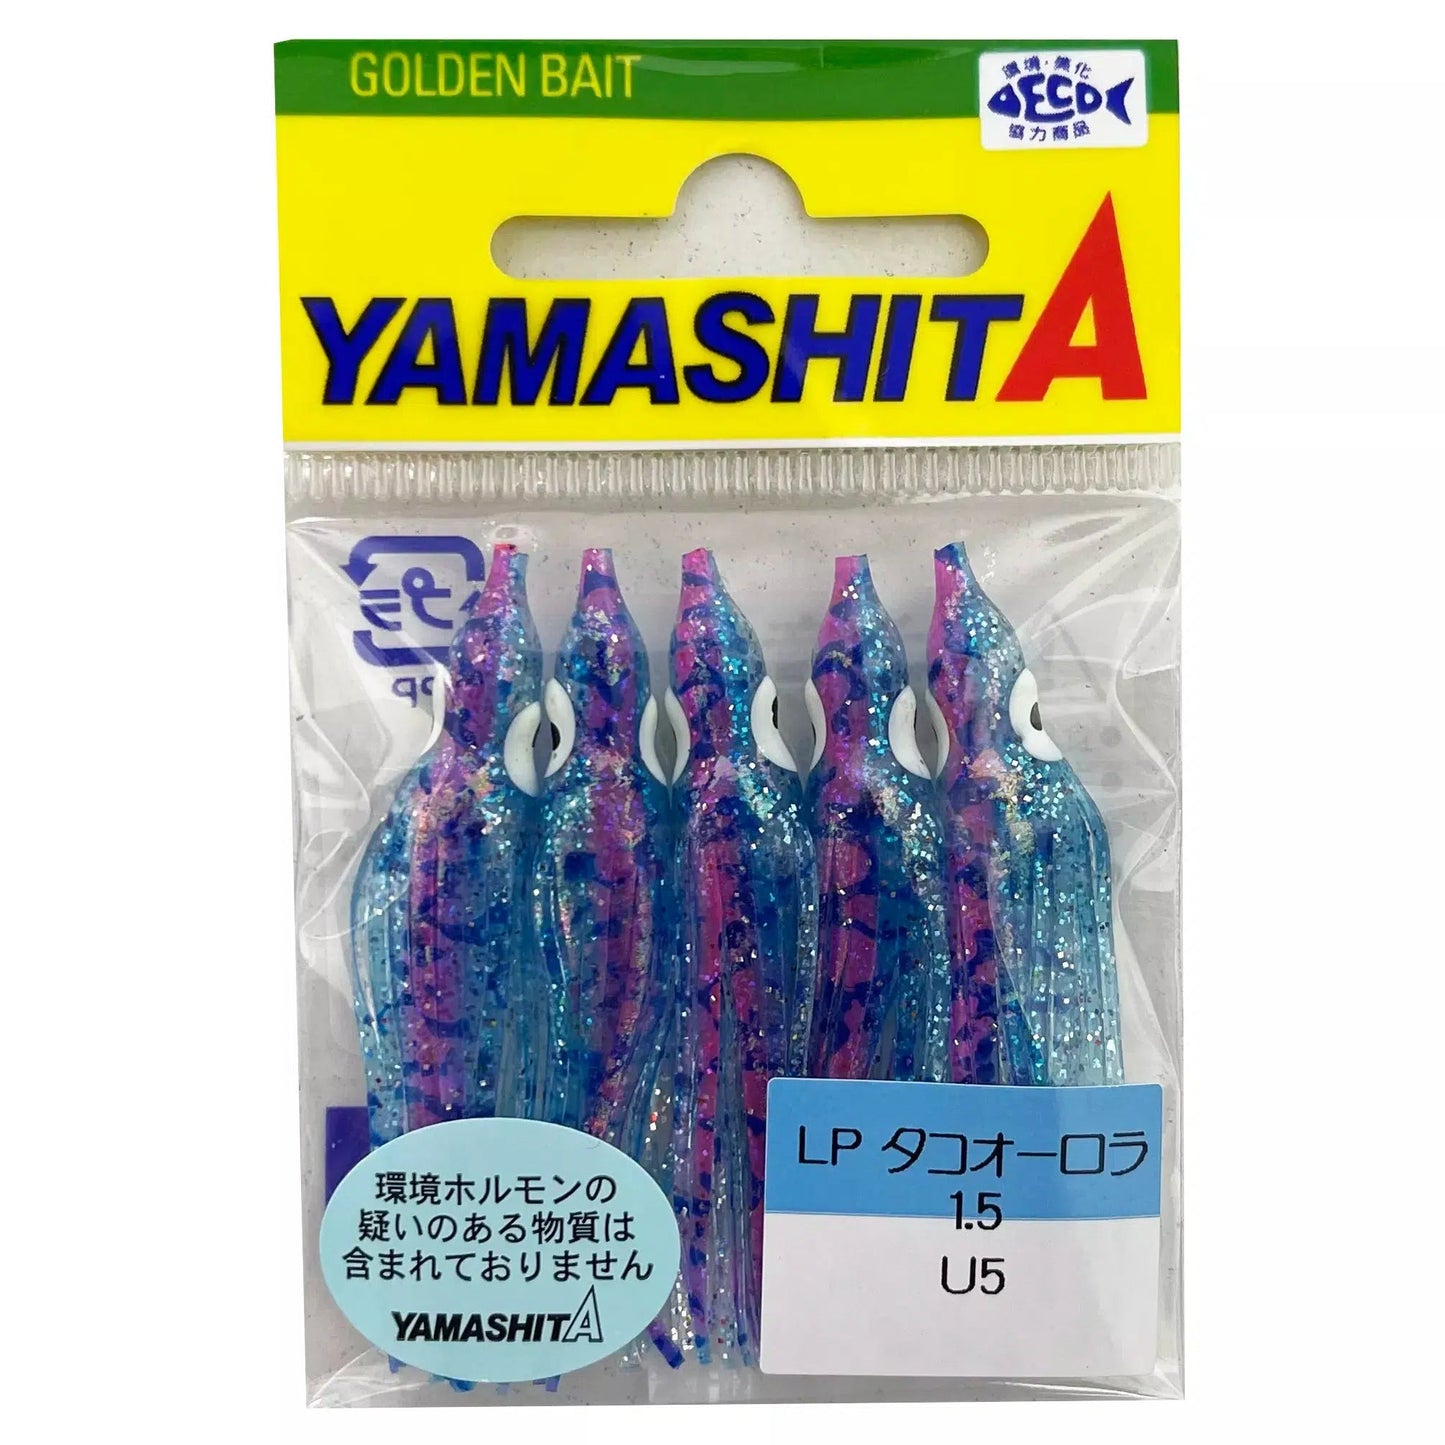 Yamashita Golden Bait Skirt (5 per pack)-Skirt-Yamashita-1.5-Clear/Blue Pink-Fishing Station